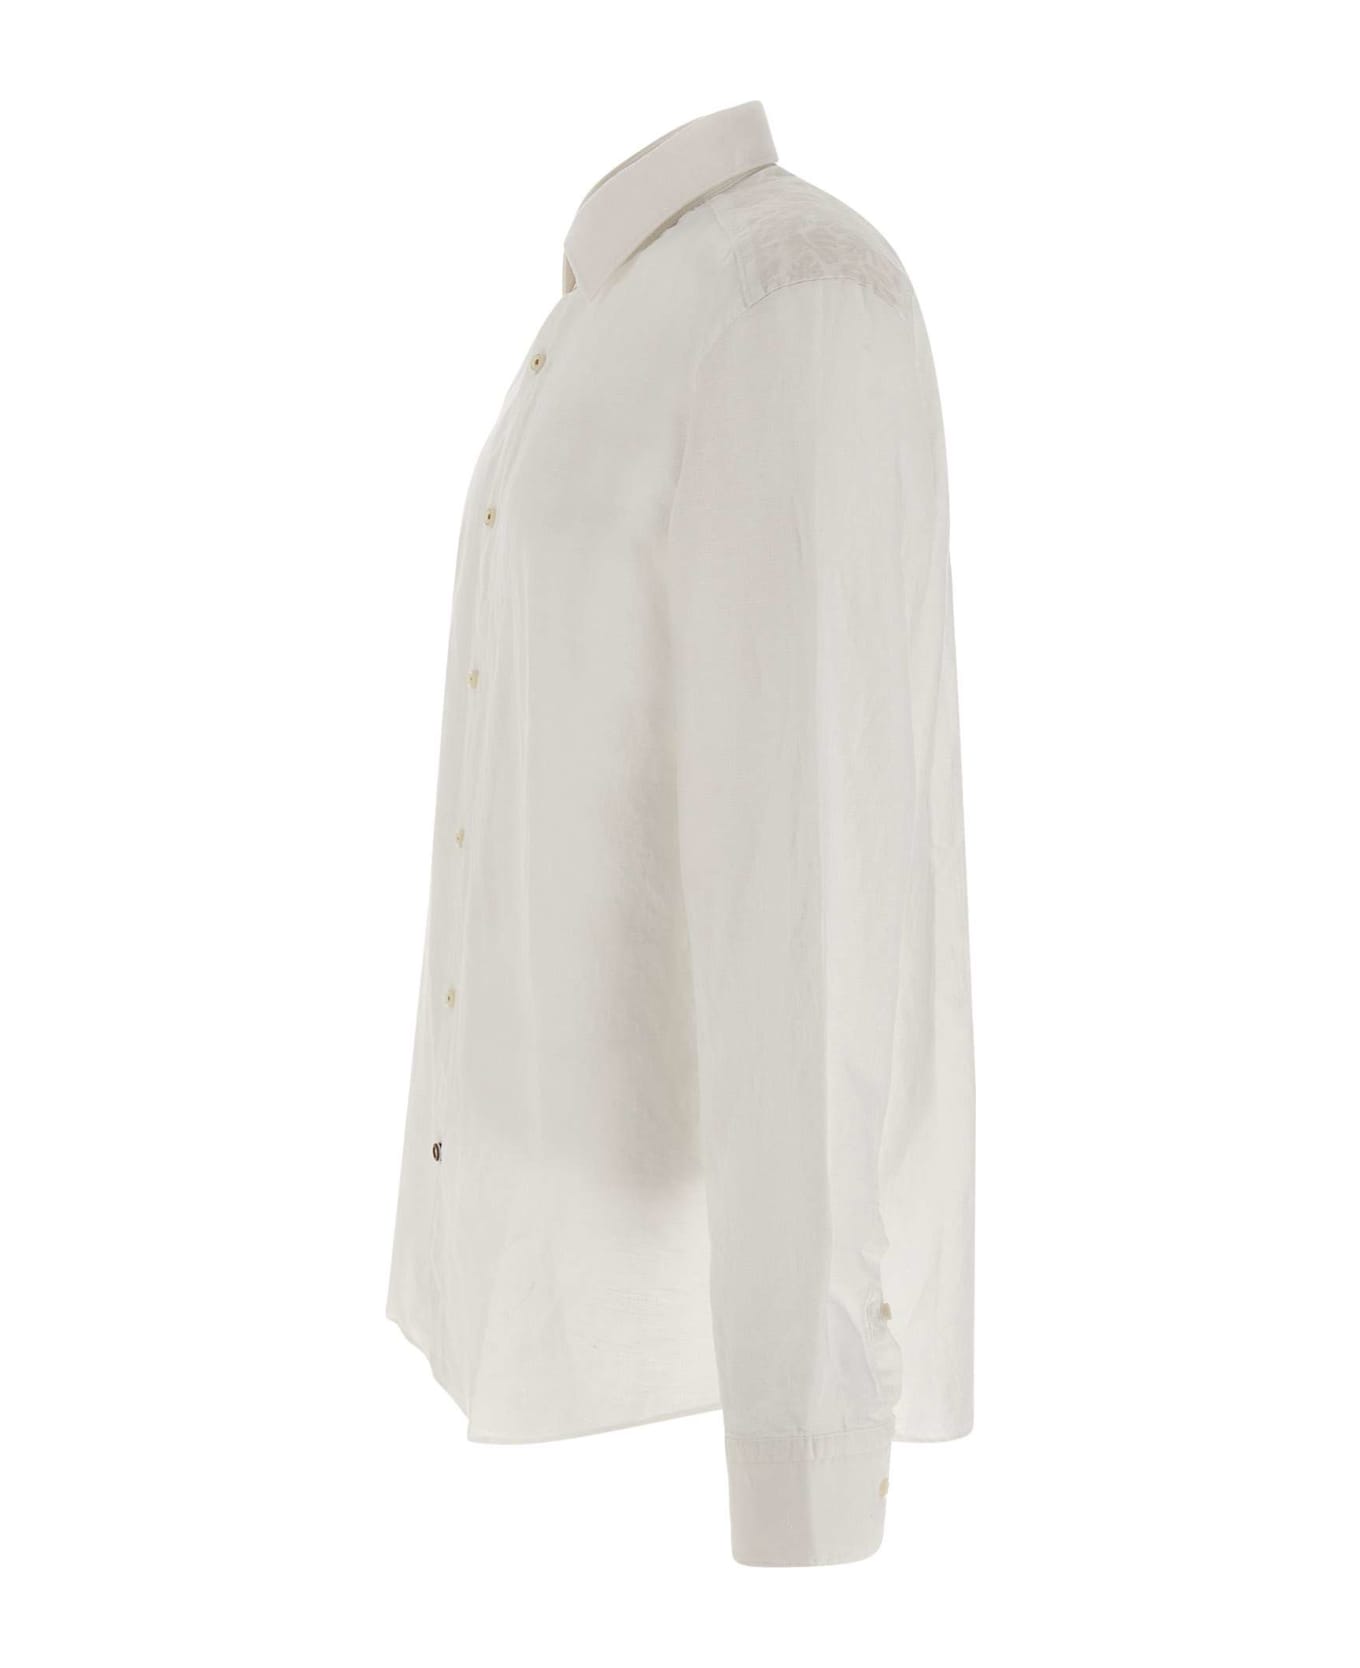 Hugo Boss "c-hal-kent" Cotton And Linen Shirt - WHITE